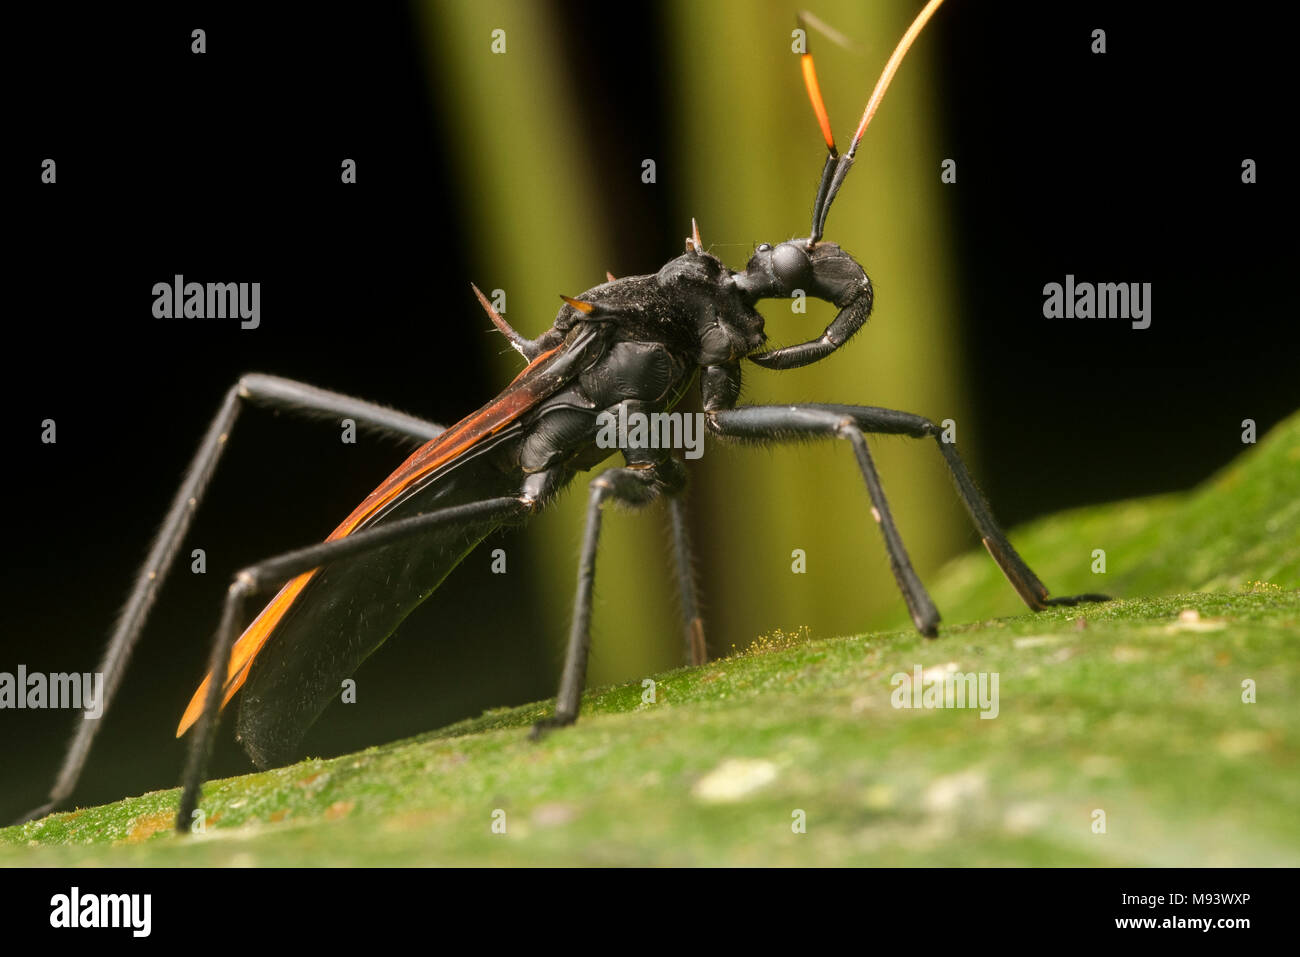 A predatory assassin bug (Zelurus sp) that mimics the tarantula hawk wasp. Stock Photo